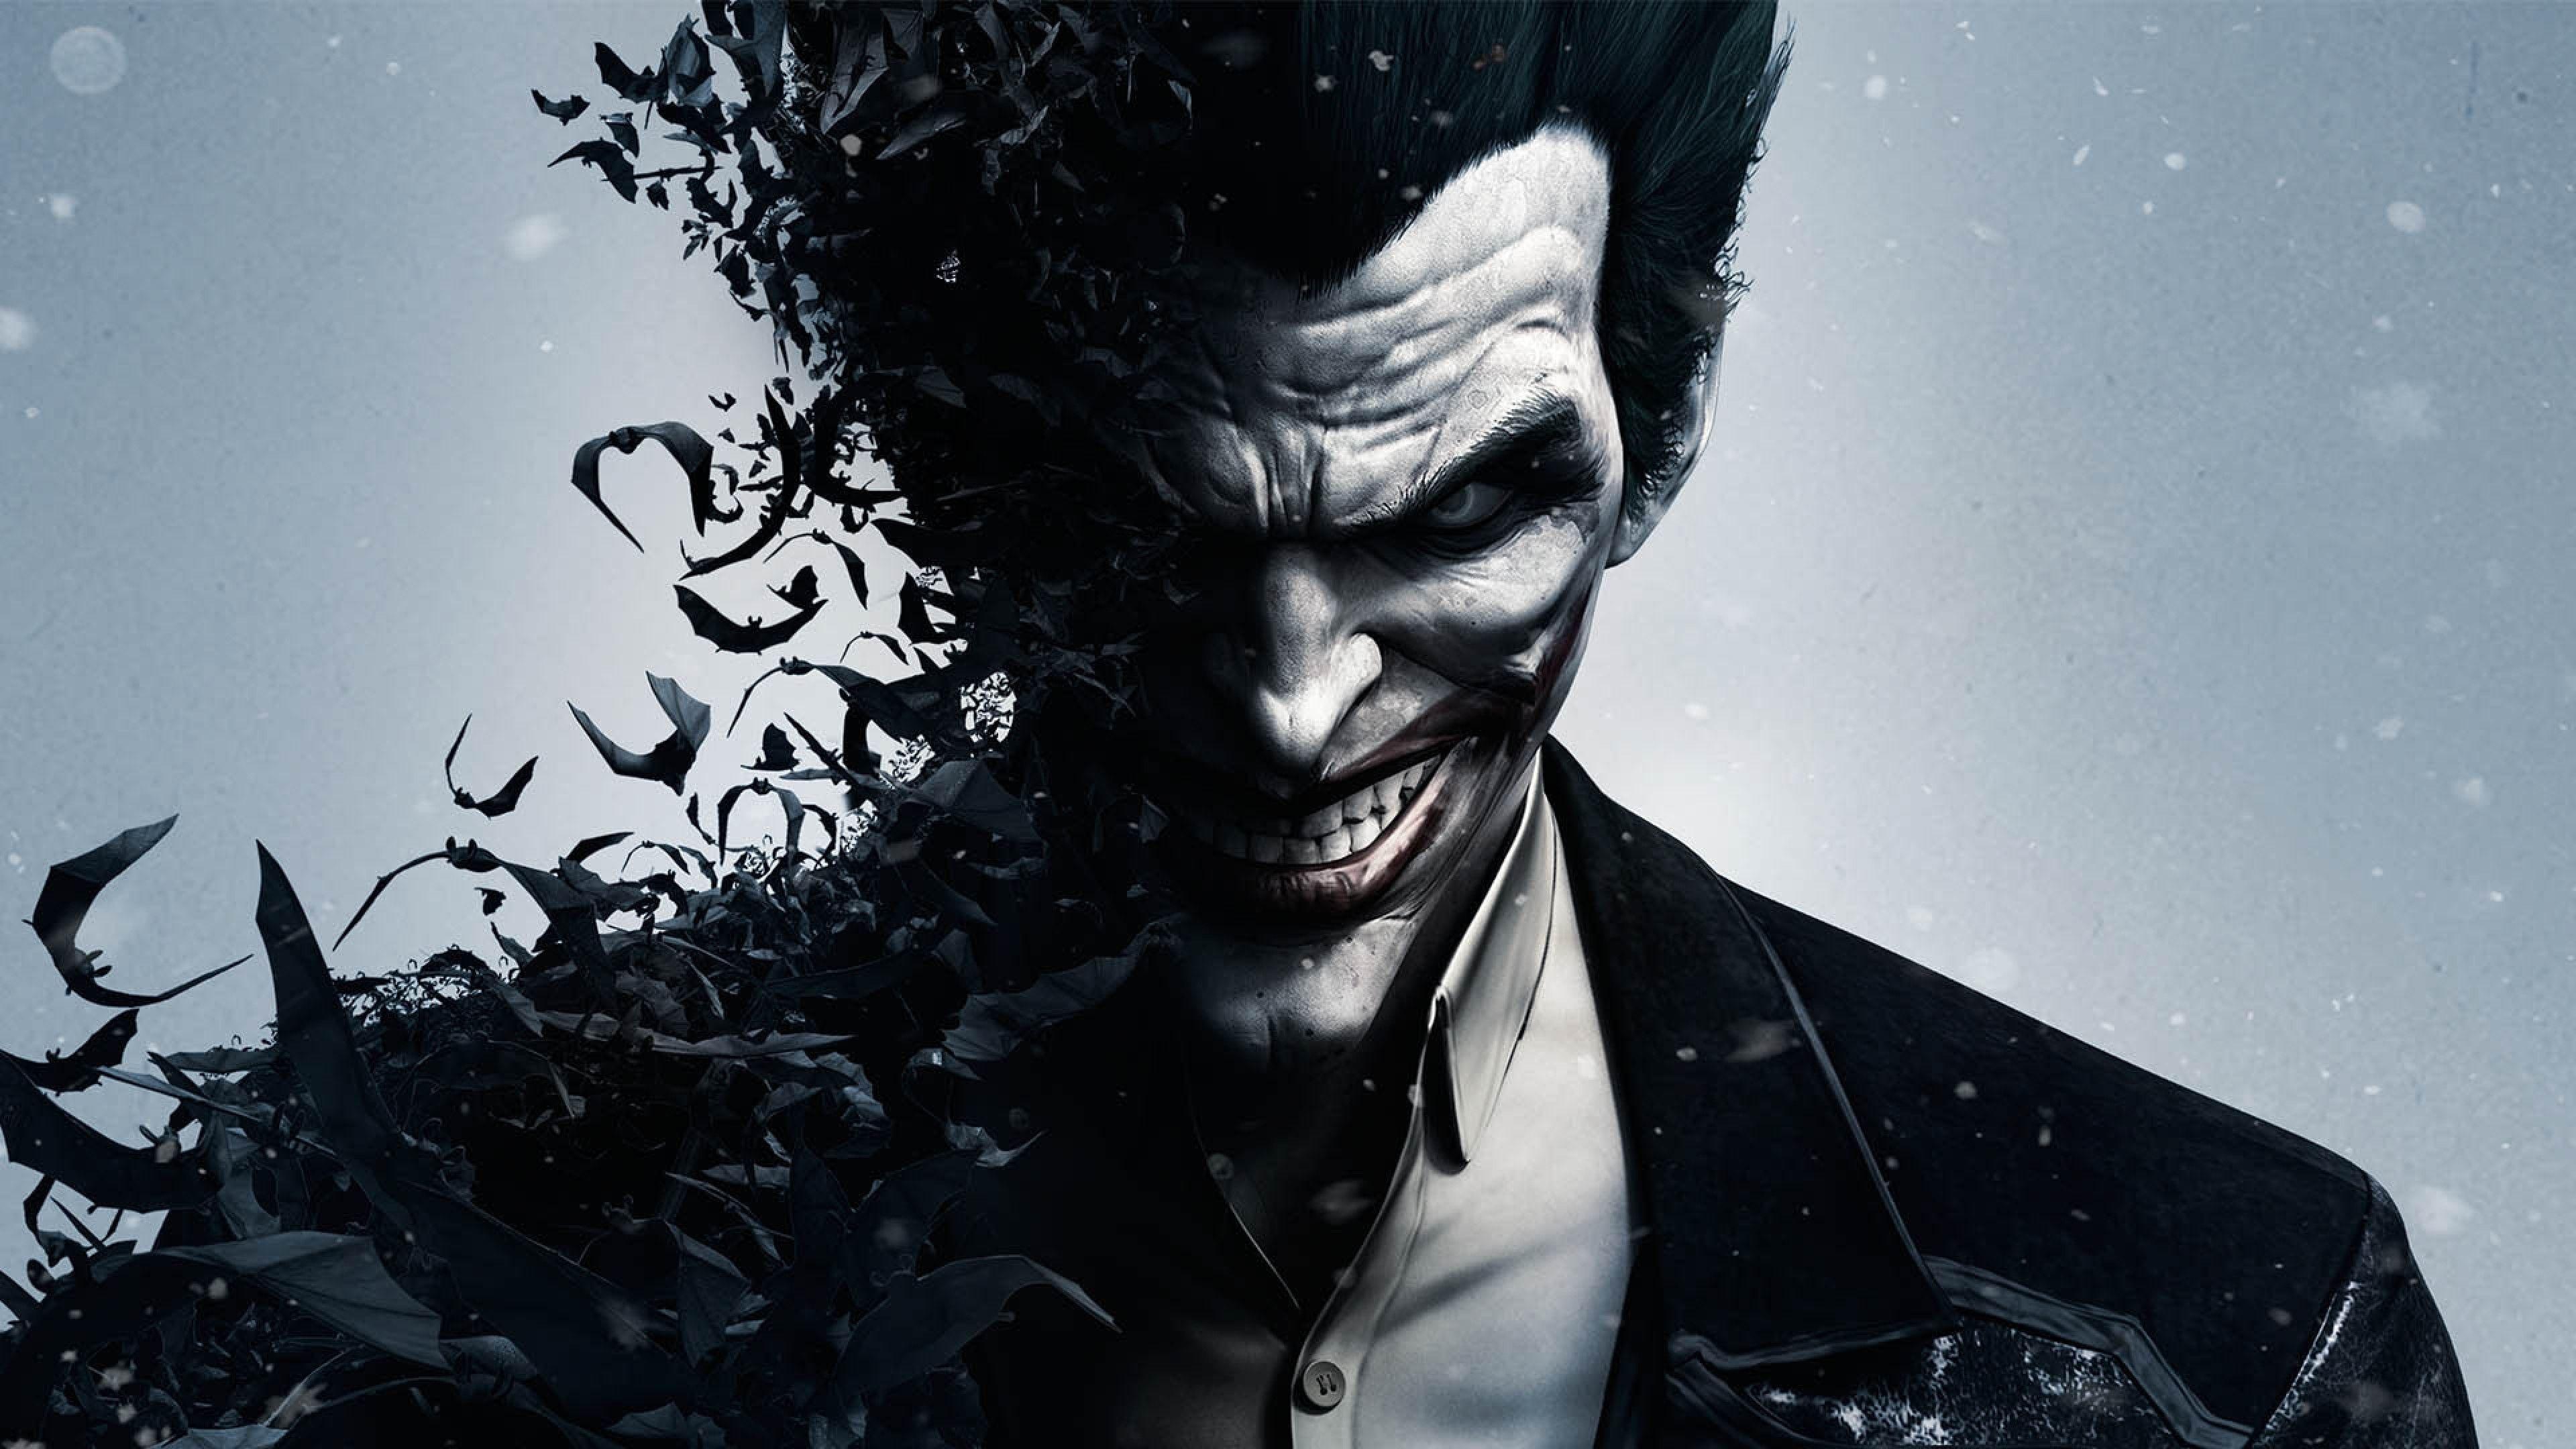 Joker Wallpaper for Windows 10 Best Of Image Batman Arkham asylum